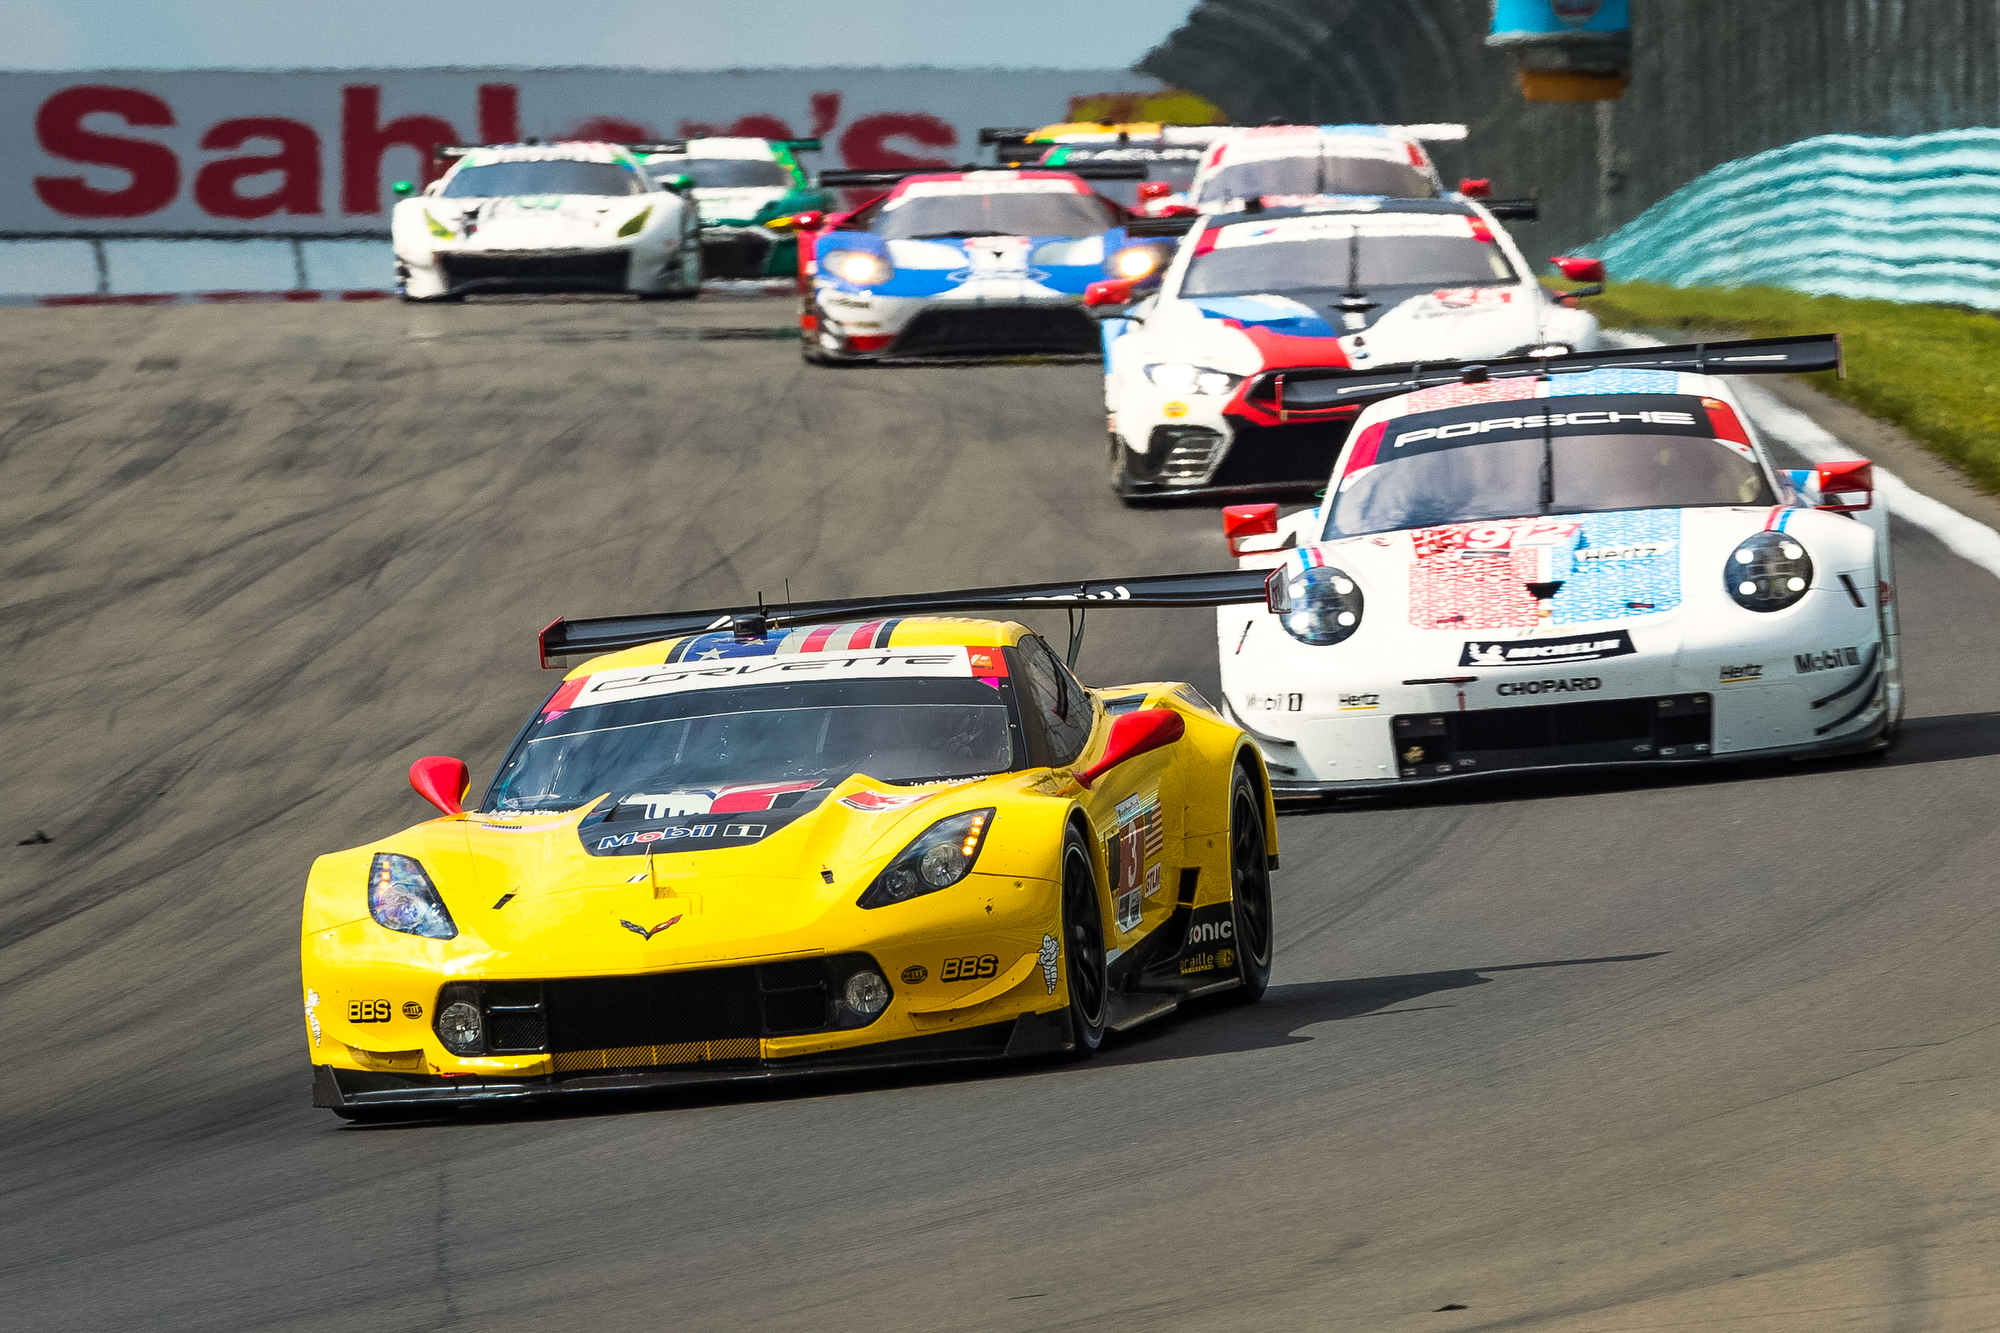 The #3 Corvette battles the Porsche